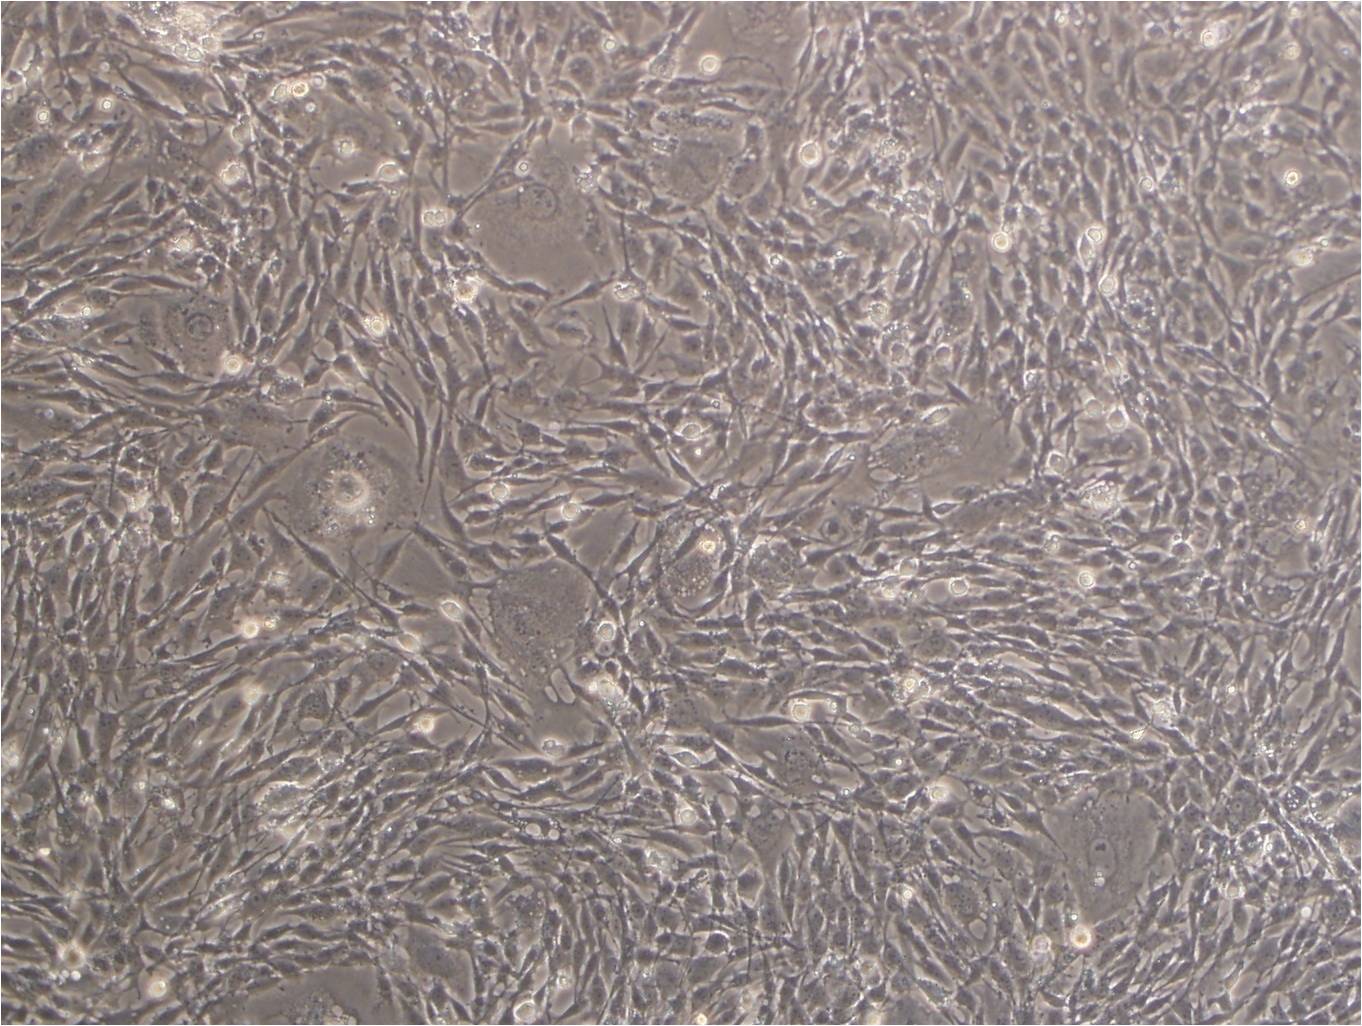 NCI-H520 Cell|人肺腺鳞癌细胞,NCI-H520 Cell